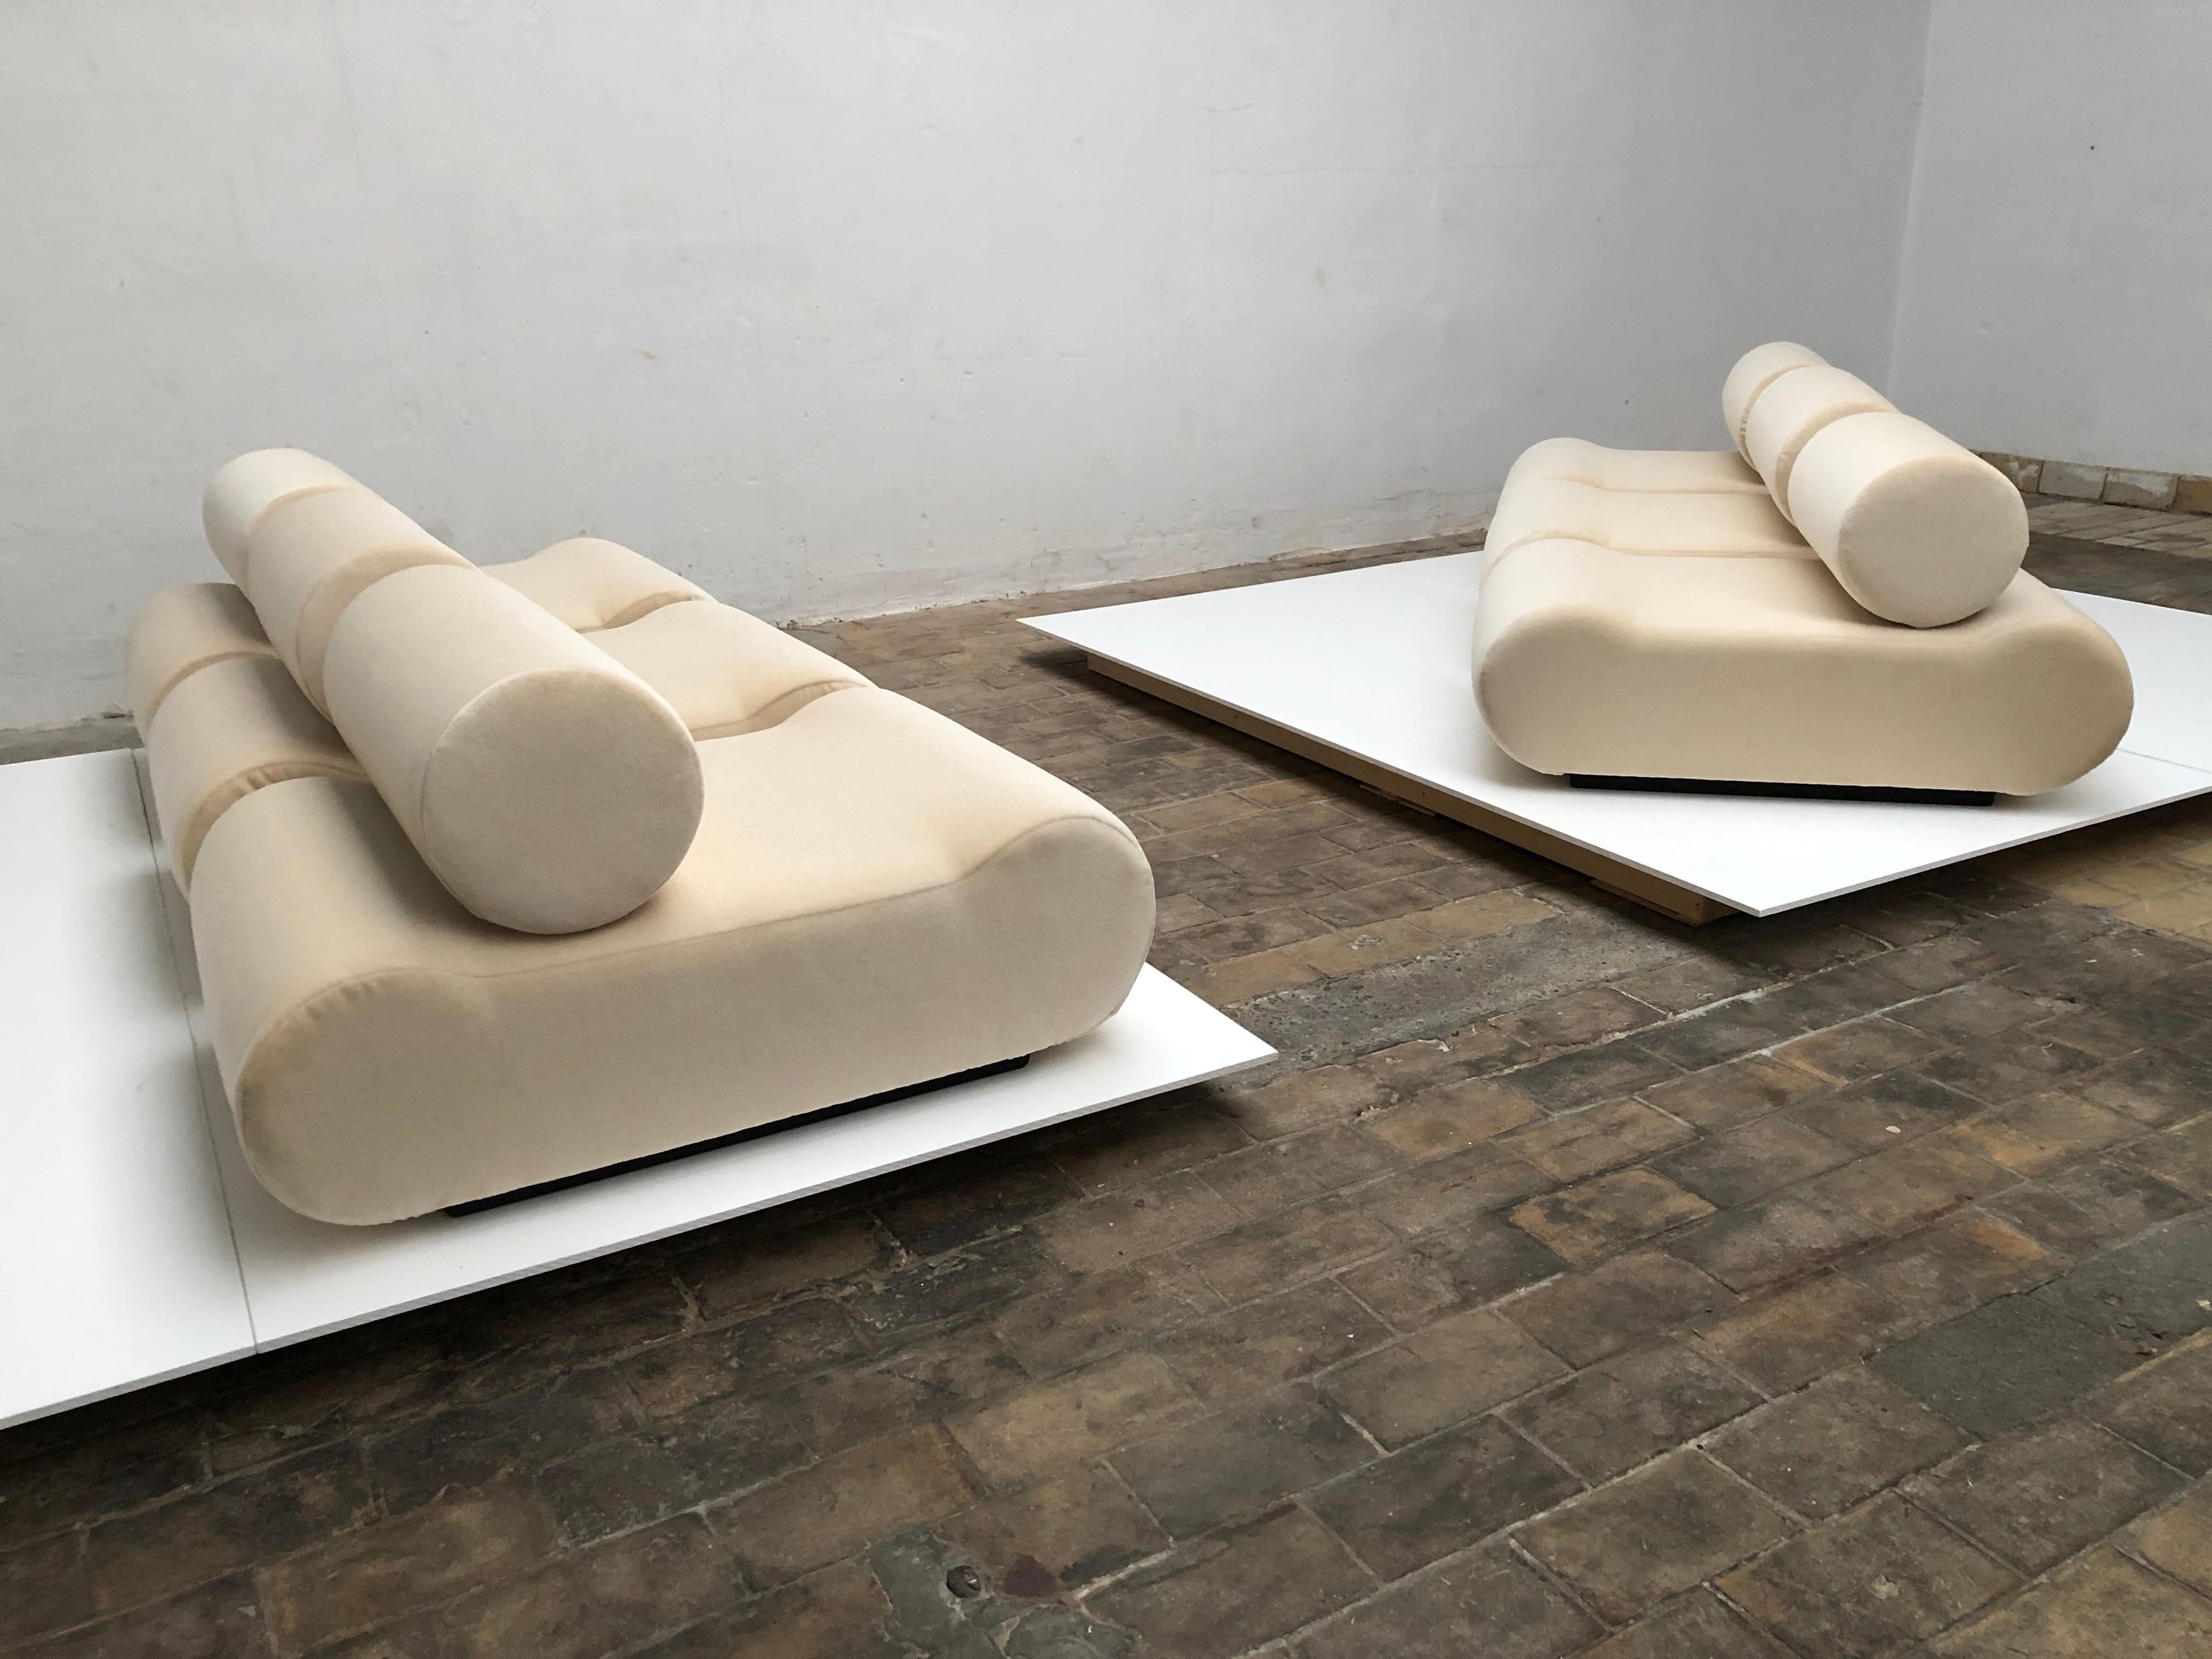 Mid-Century Modern Seating as Minimalist Sculpture, 6 Elements, Klaus Uredat, 1969 for COR, Germany